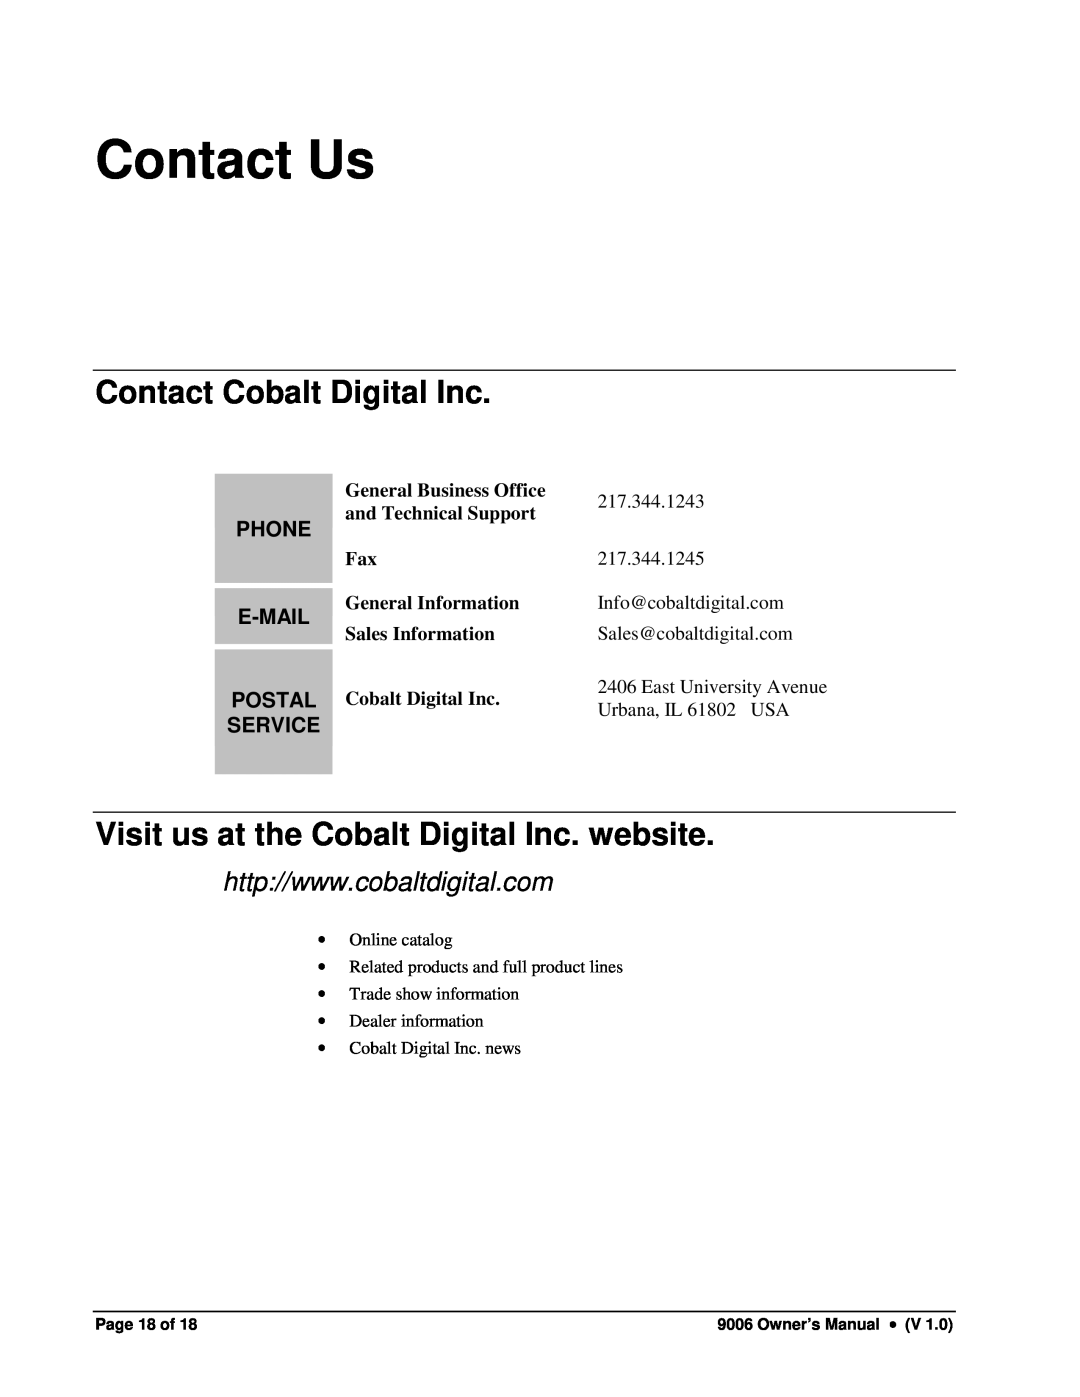 Cobalt Networks 9006 Contact Us, Contact Cobalt Digital Inc, Visit us at the Cobalt Digital Inc. website, Service 